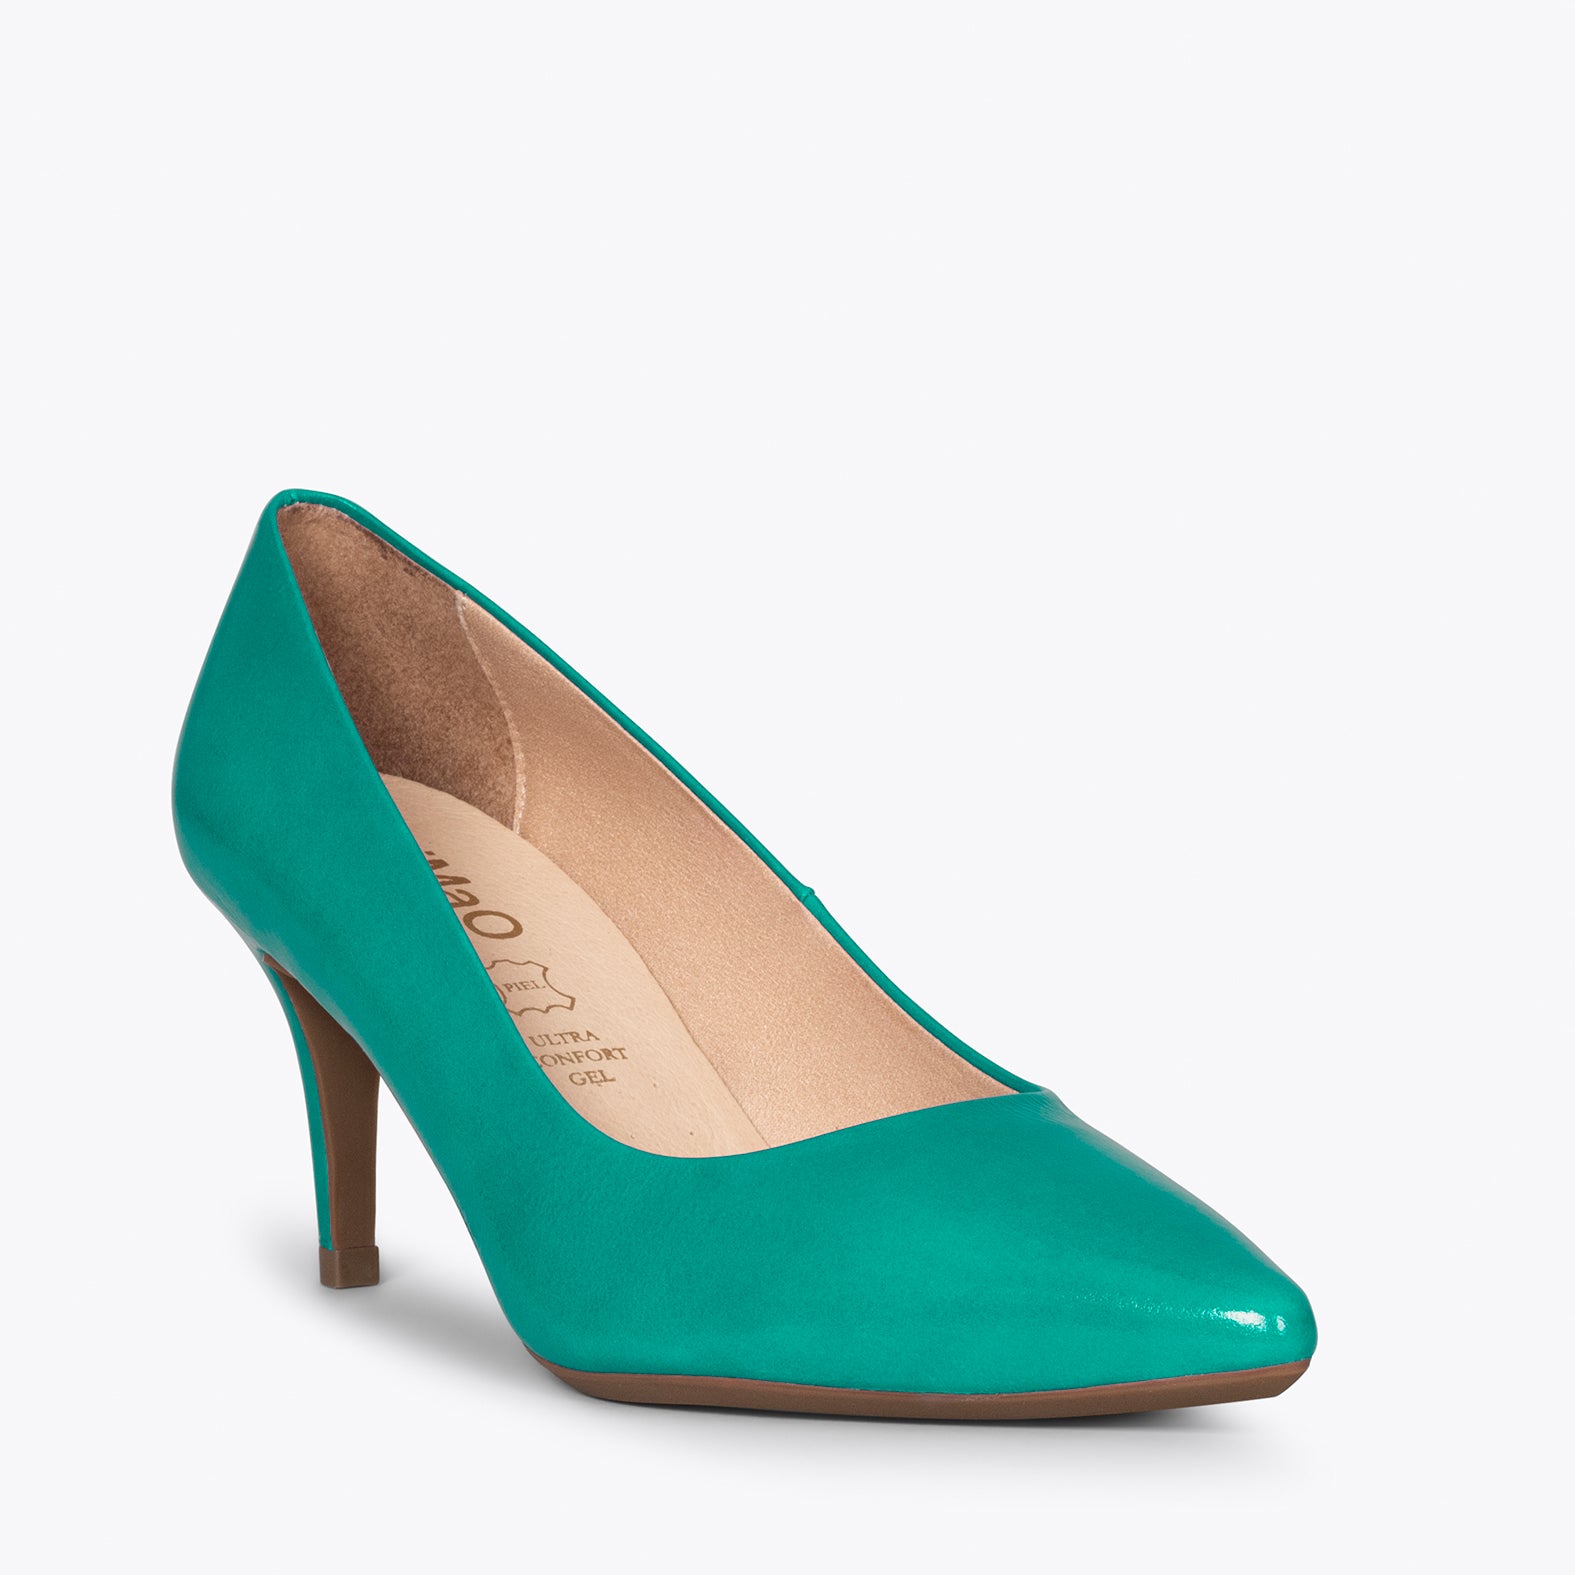 STILETTO PATENT – TURQUOISE patent leather stiletto heel